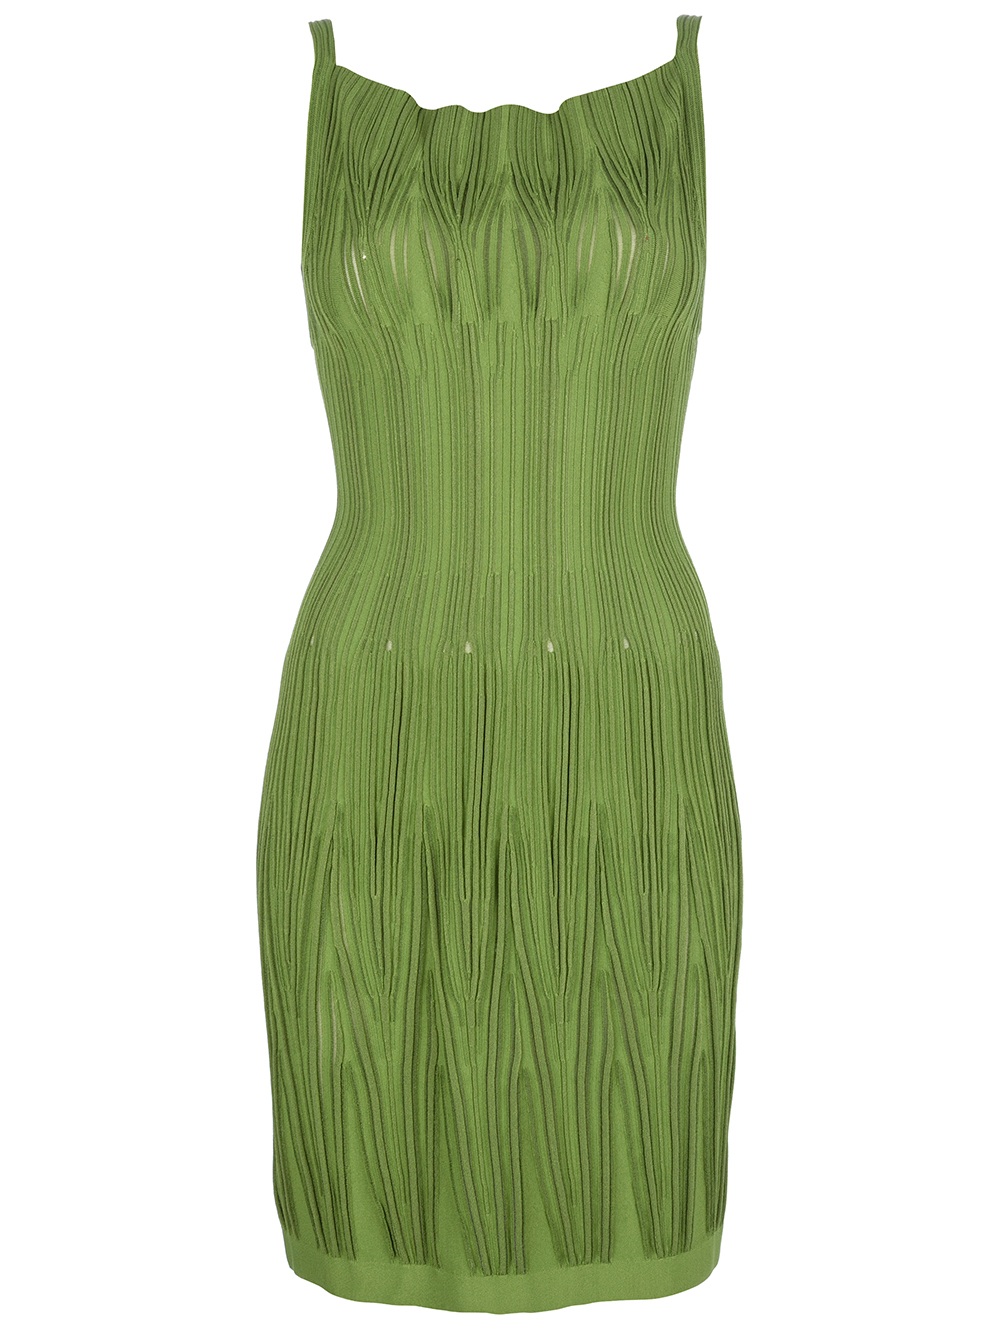 Alaïa Sleeveless Knit Dress in Green - Lyst